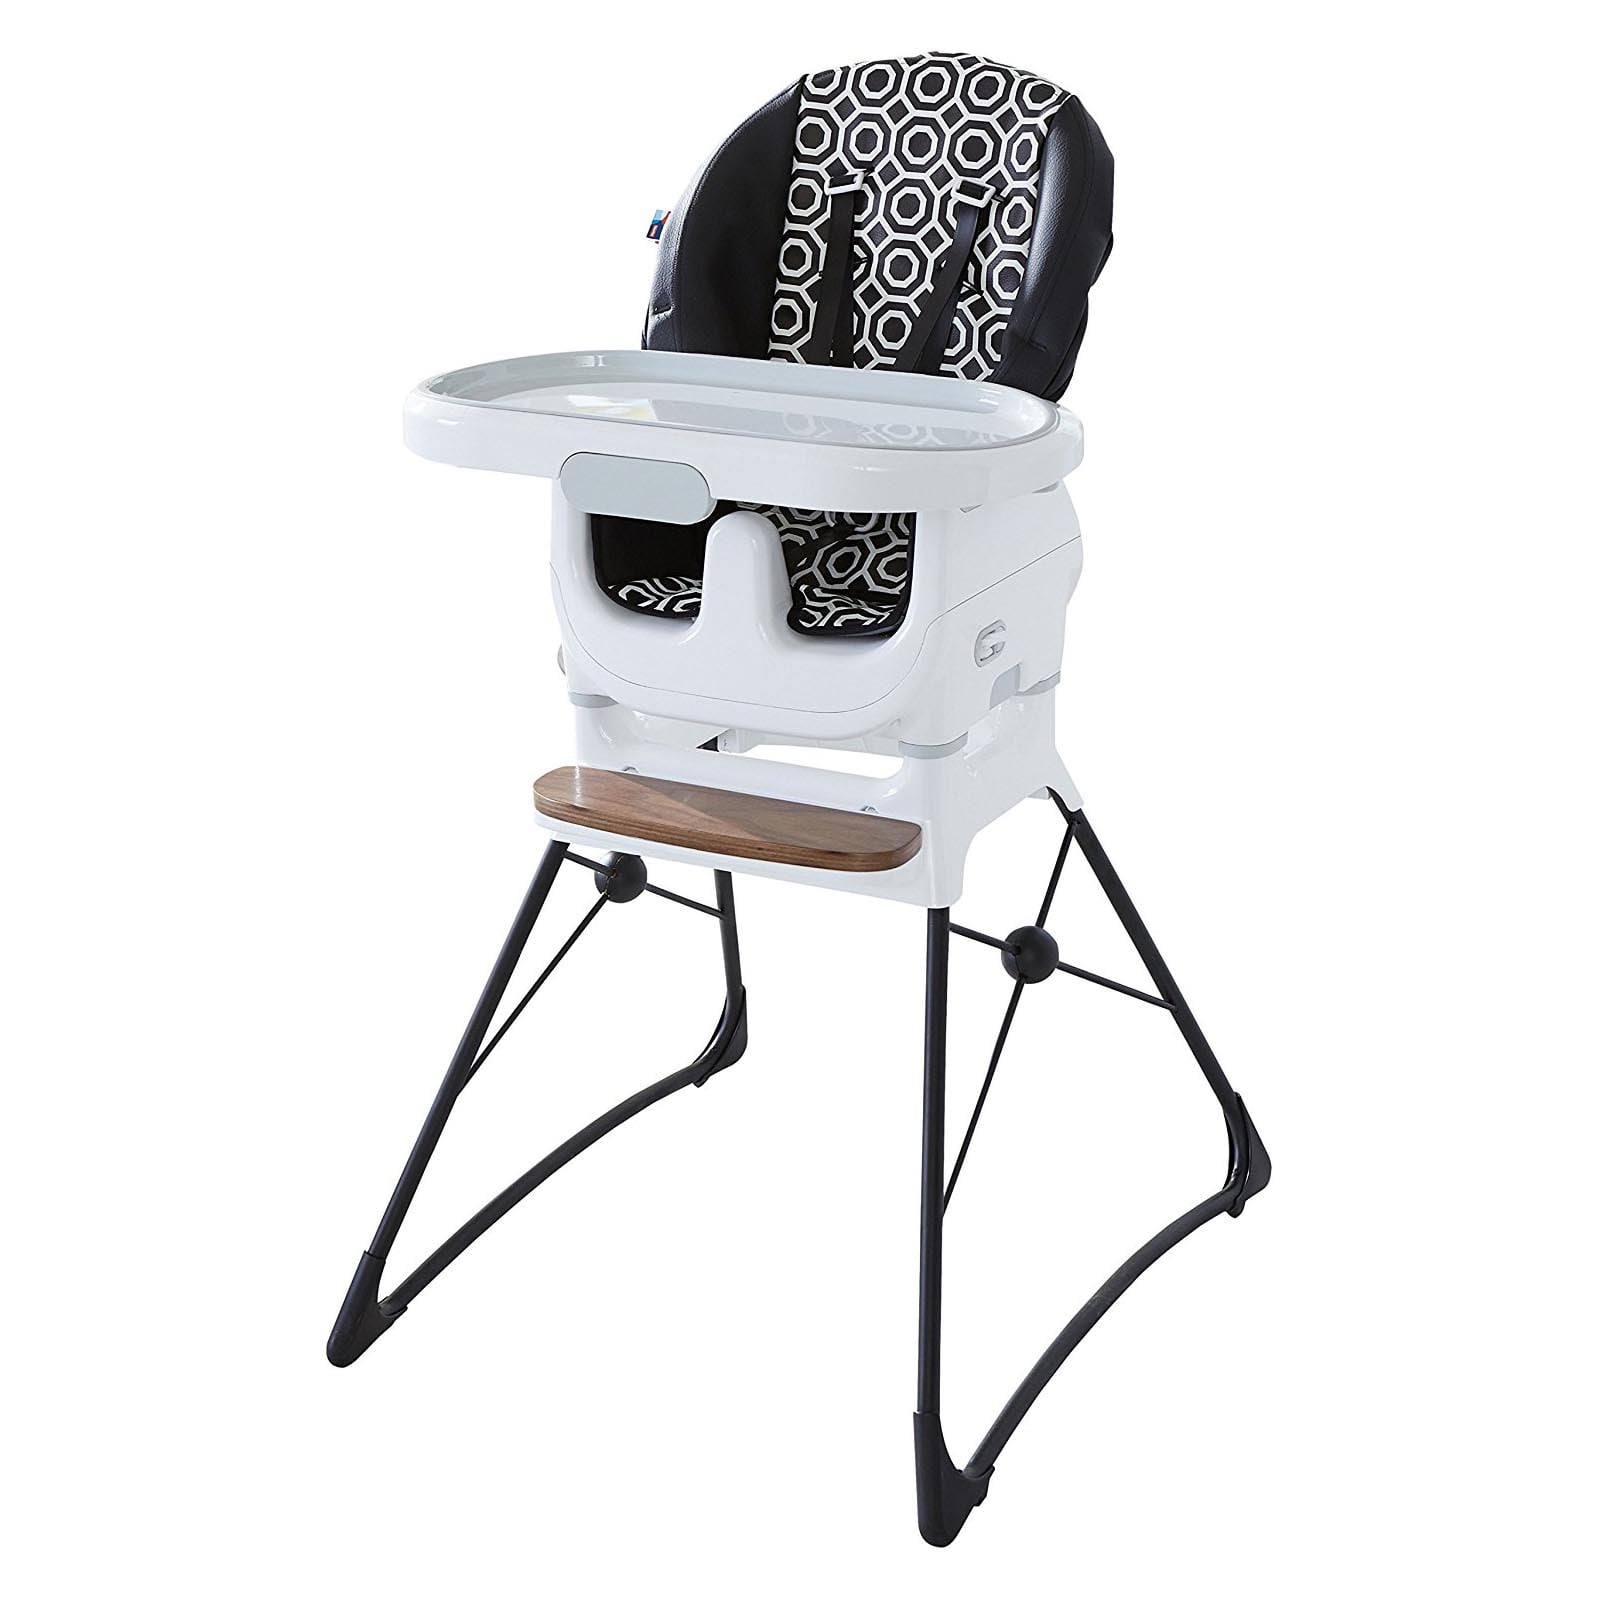 Fisher Price Deluxe 2 In 1 Baby High Chair Toddler Booster Spacesaver Highchair Walmartcom Walmartcom